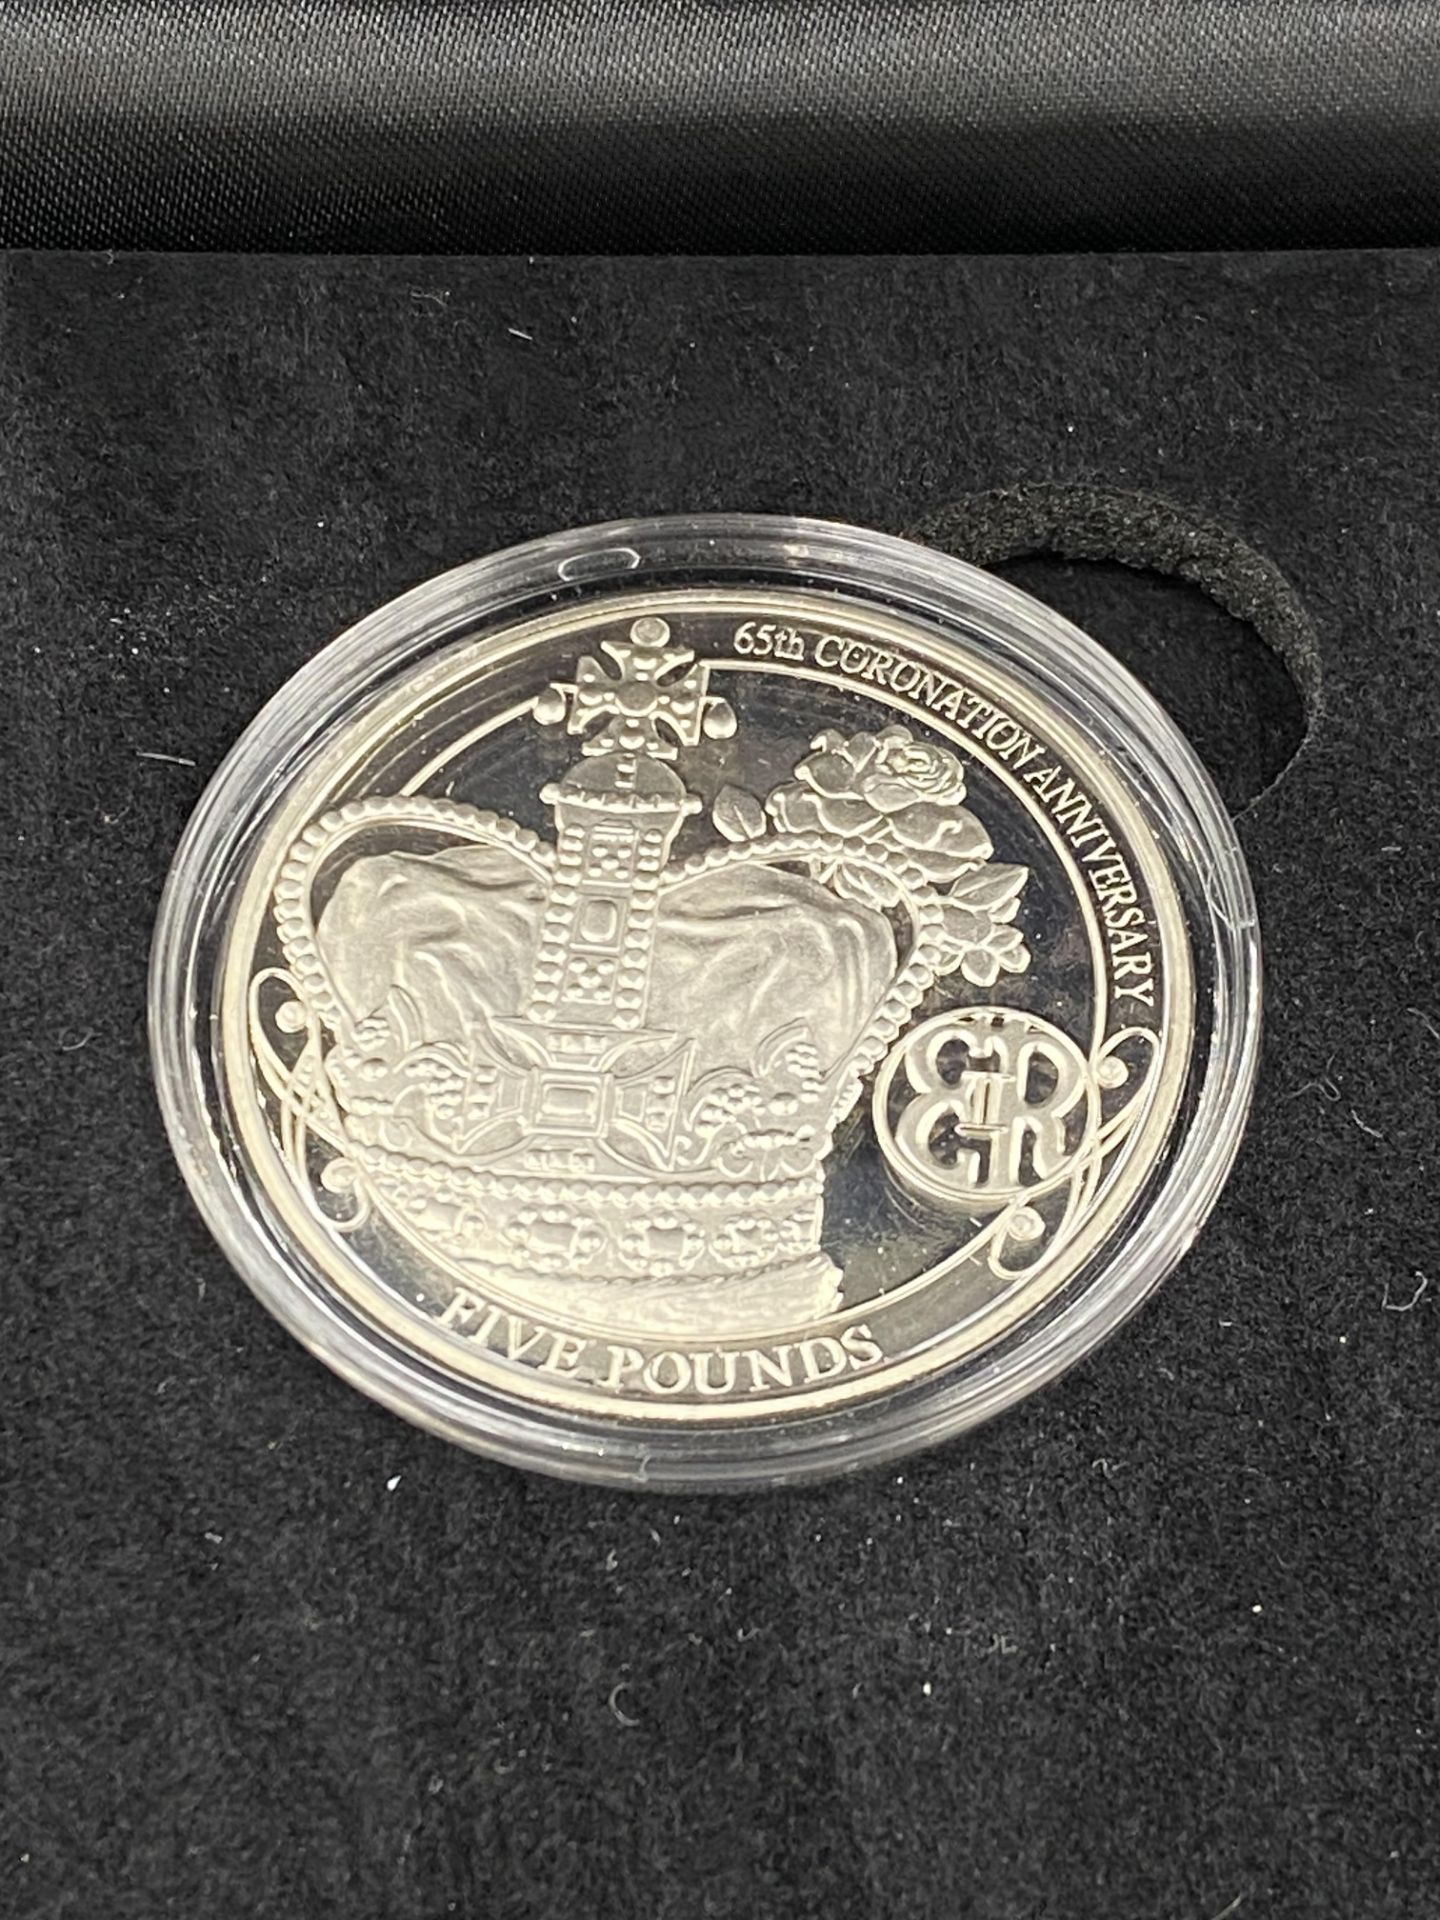 Queen Elizabeth Platinum Wedding Anniversary silver proof coin set - Image 4 of 8